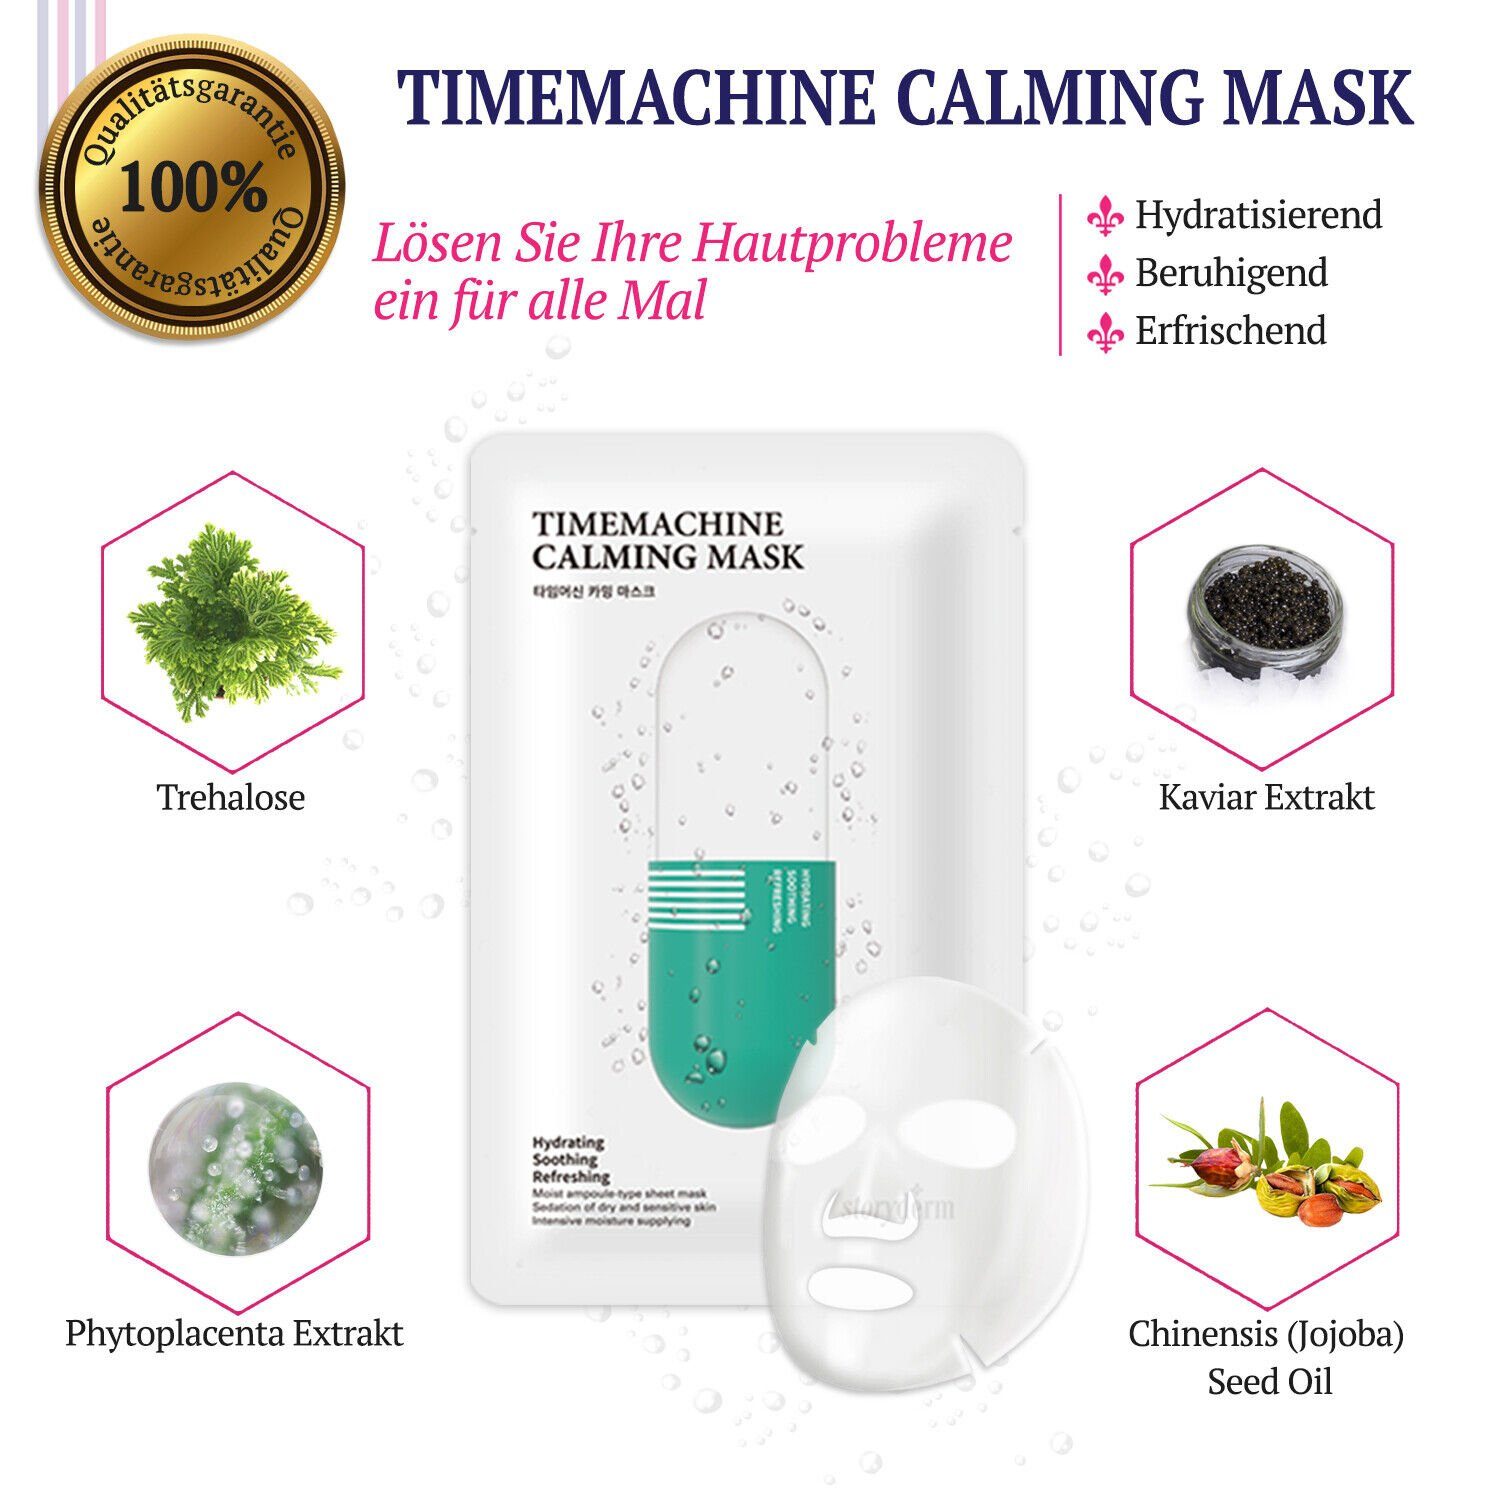 Storyderm Gesichtsmaske NEUHEIT Premium aus TIMEMACHINE Pflege Storyderm CALMING, Korea Tuchmaske Gesichtsmaske 1-tlg